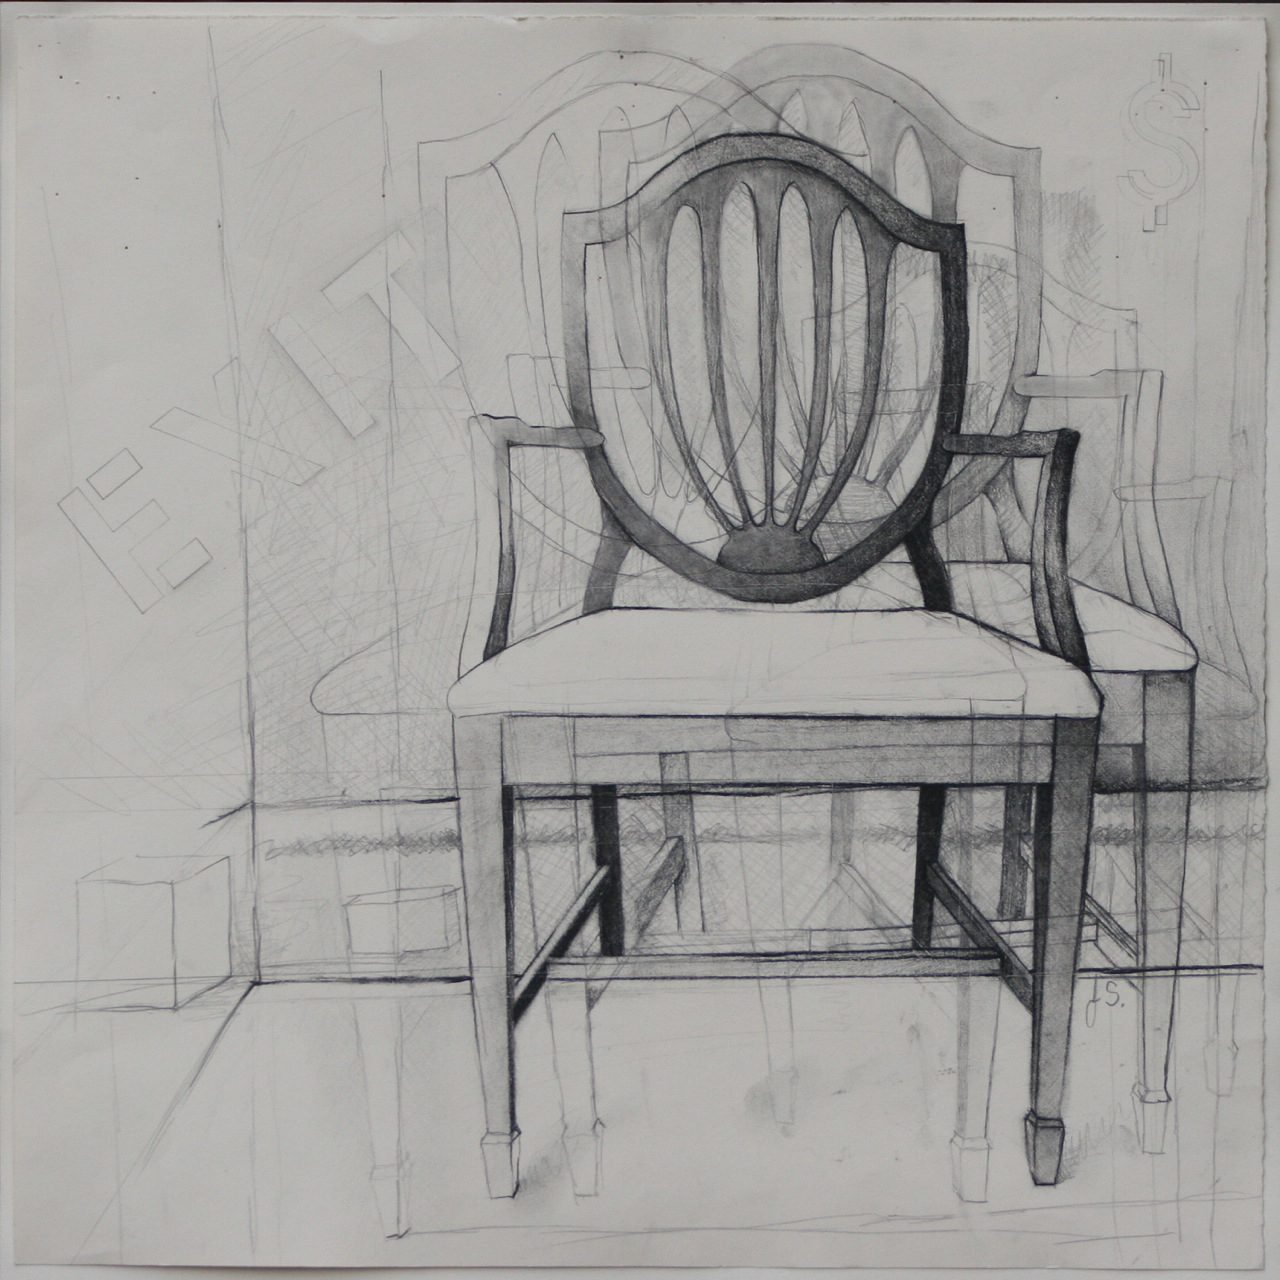 Exit Chair by Joe Sheridan at Les Yeux du Monde Art Gallery